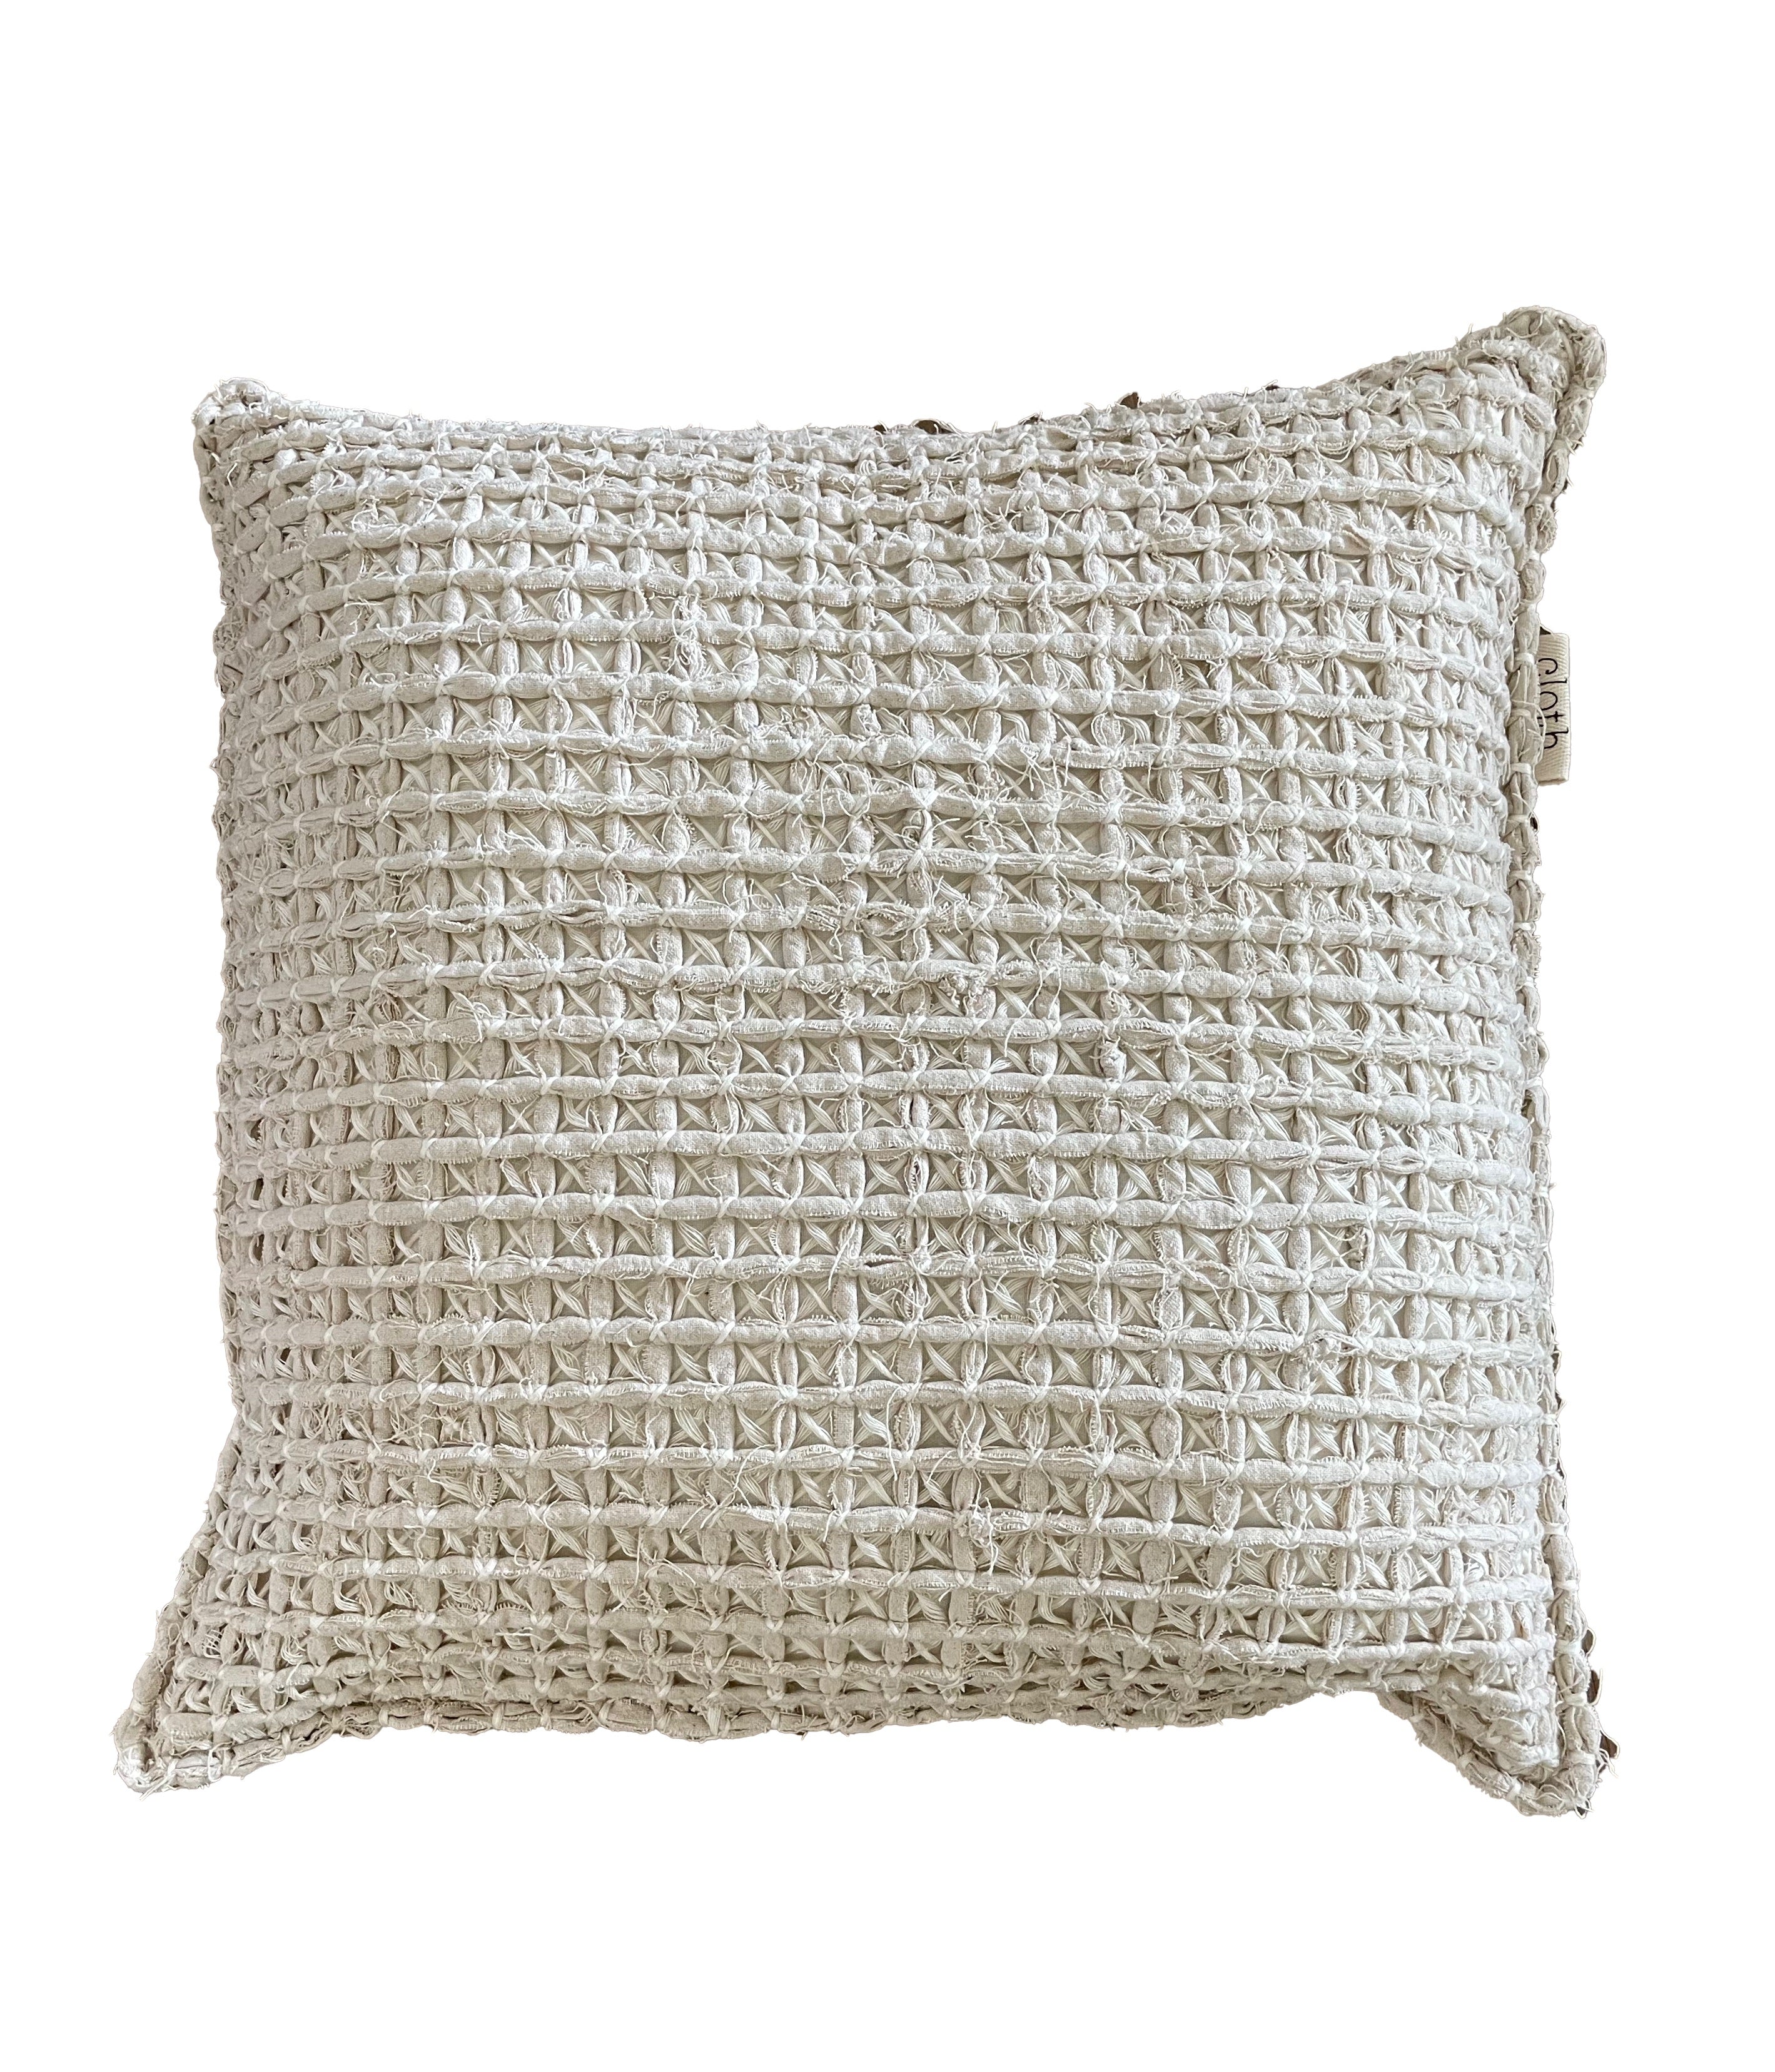 Handmade cushion woven